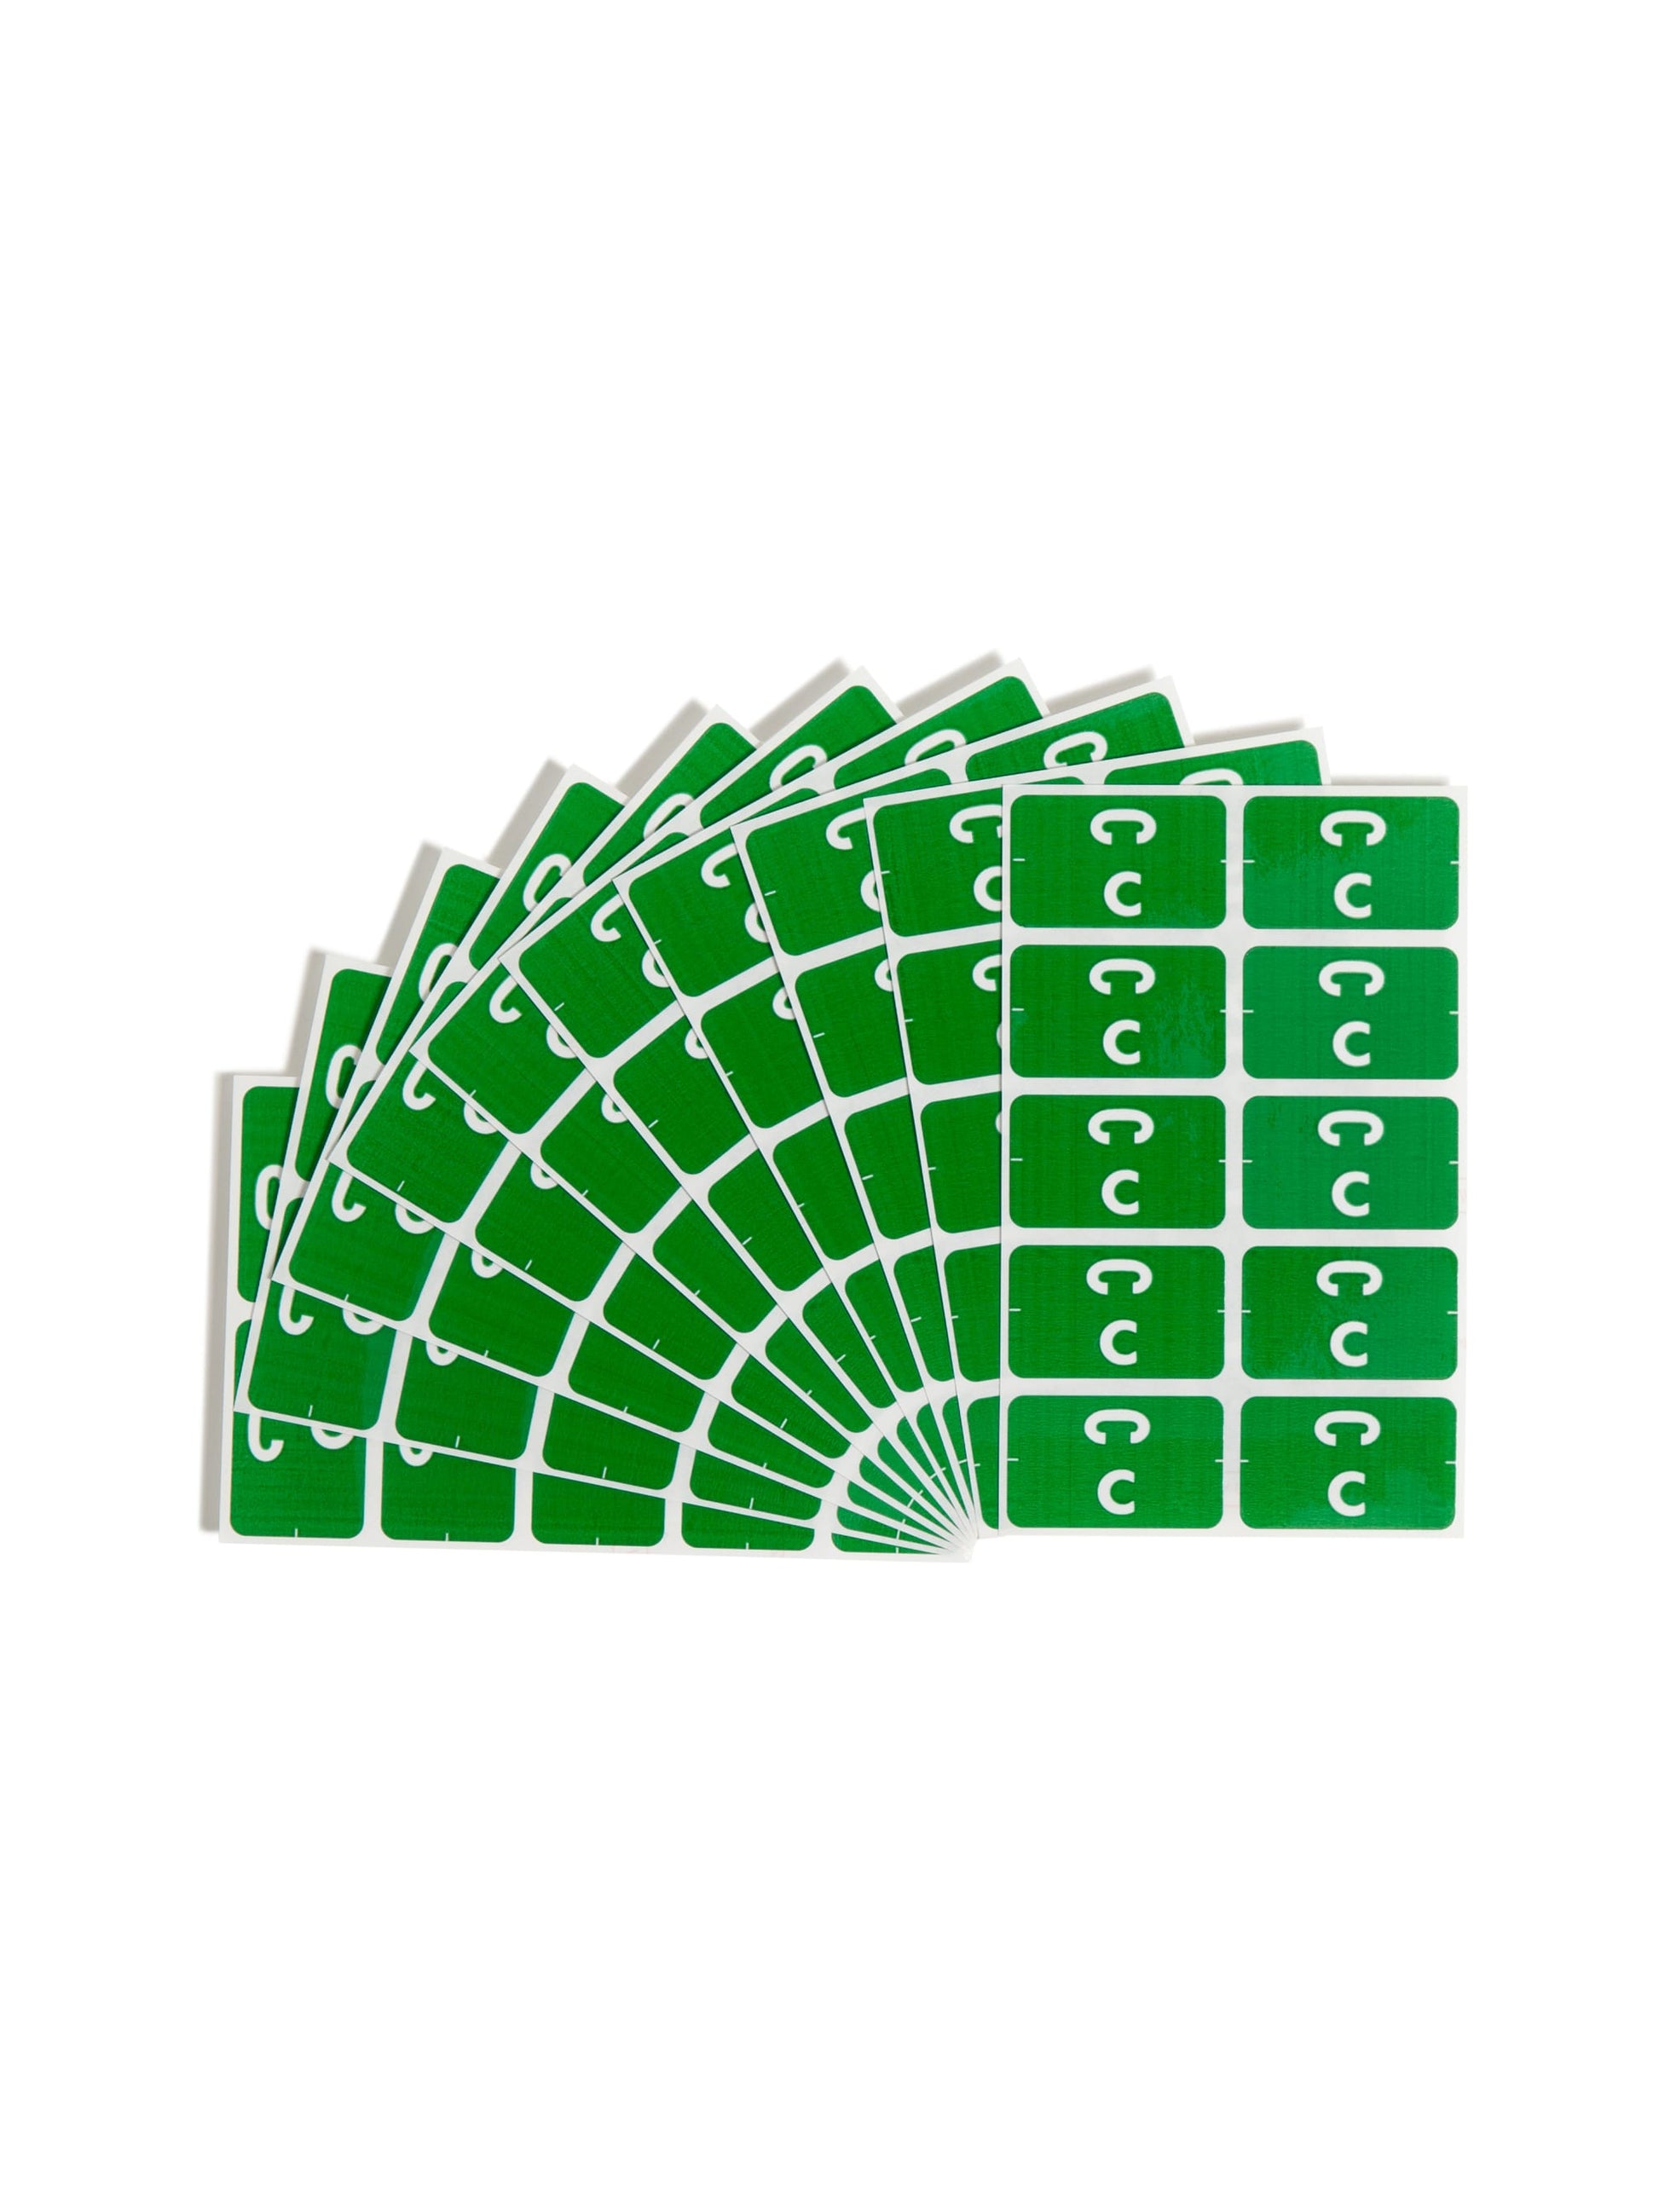 AlphaZ® ACCS Color Coded Alphabetic Labels - Sheets, Dark Green Color, 1" X 1-5/8" Size, Set of 1, 086486671736